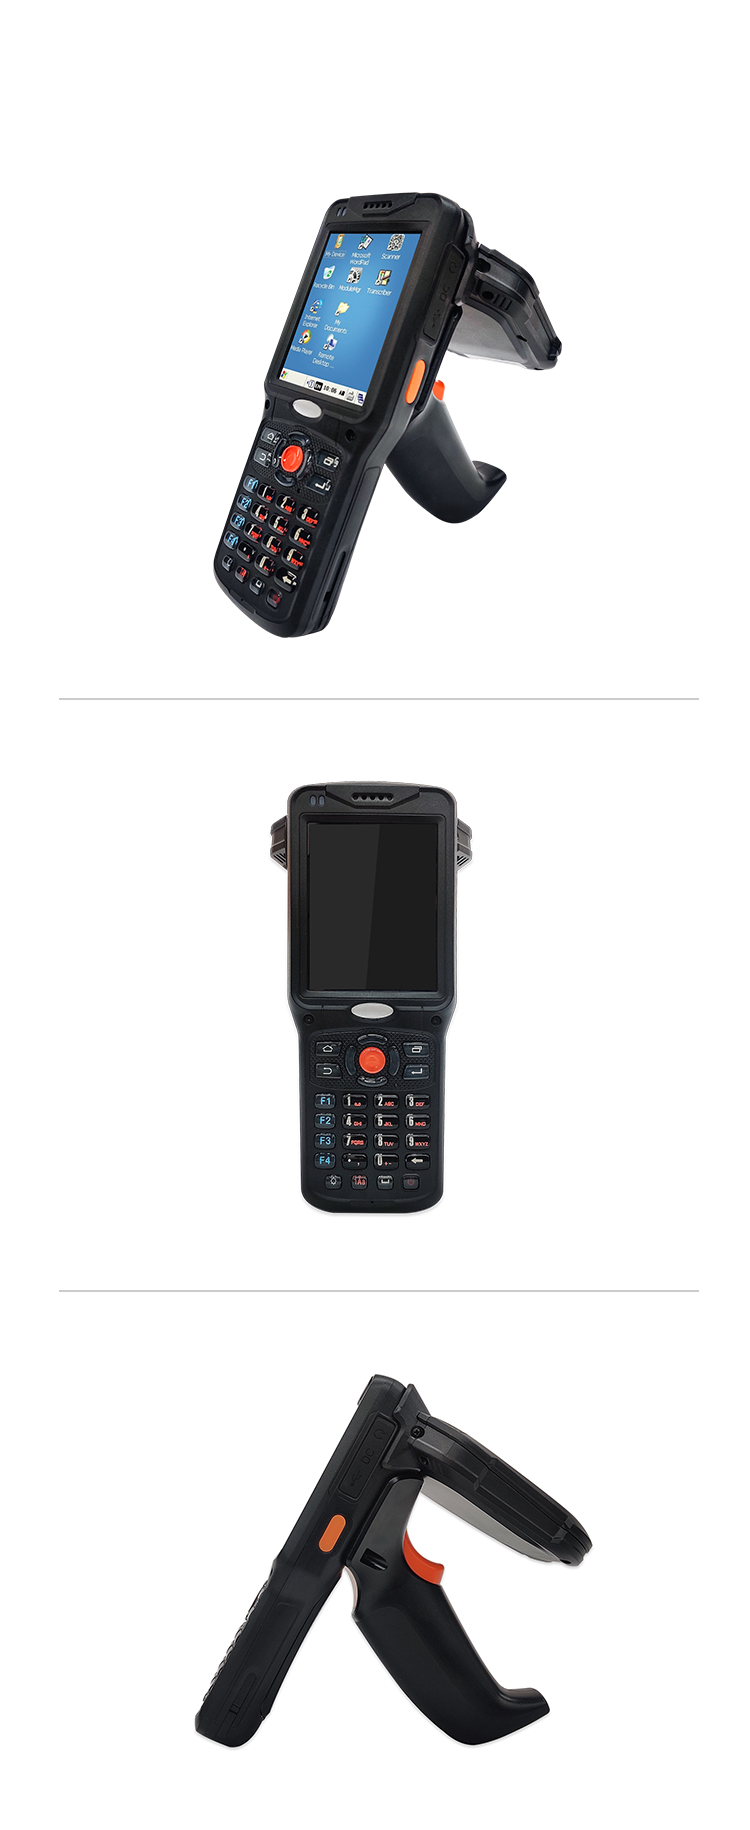 Handheld RFID Reader Has Number Keyboard For Warehouse Management 13.56MHz PDA